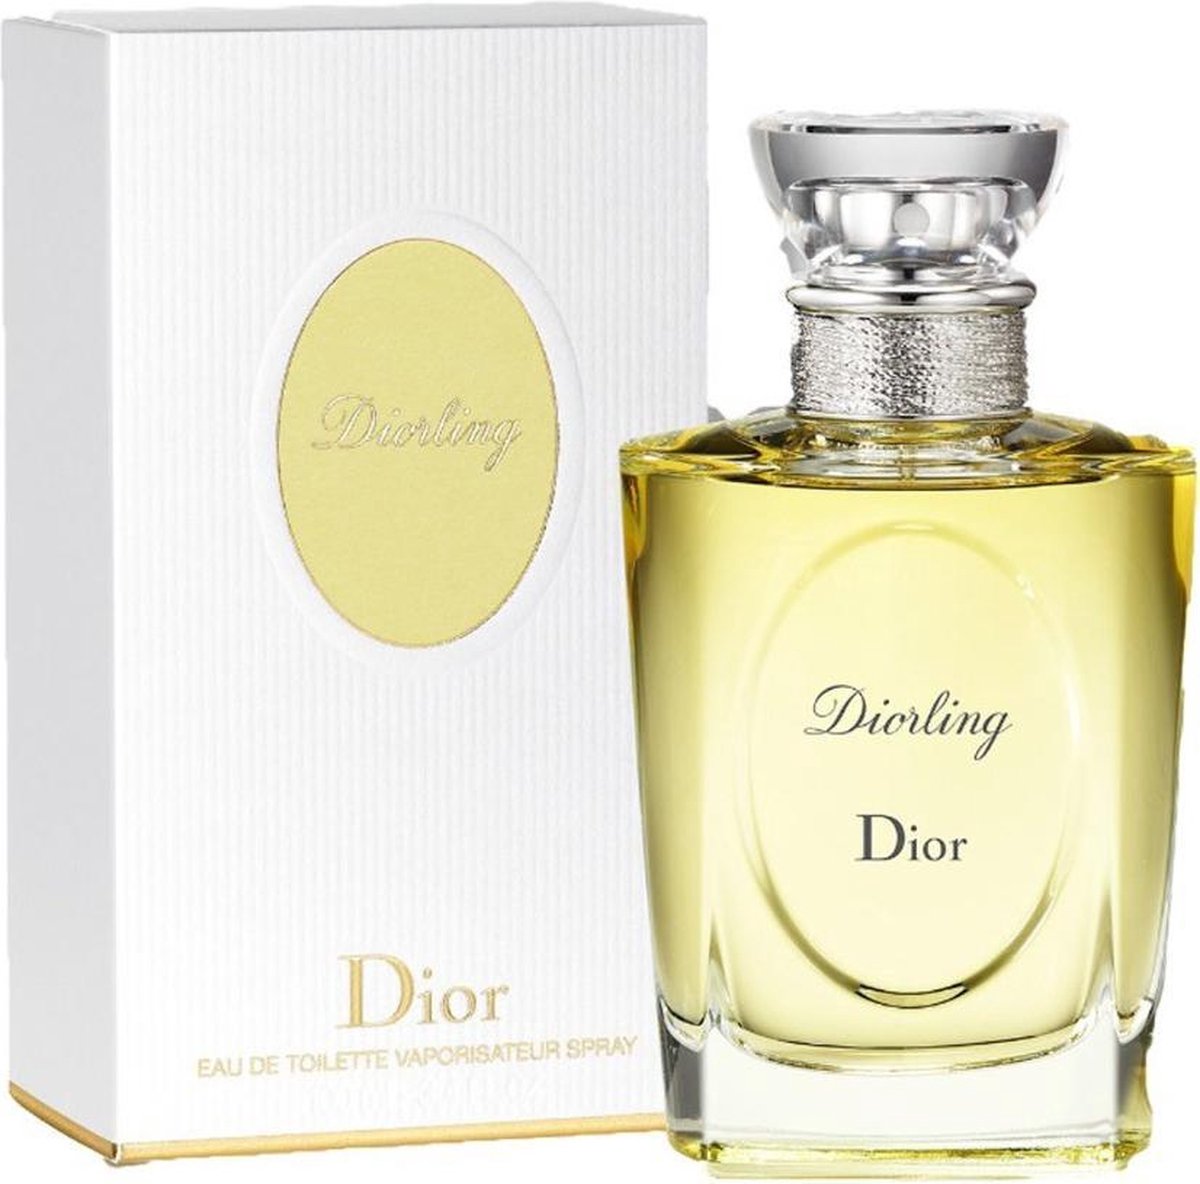 Diorling - Christian Dior - 100 ml - edt